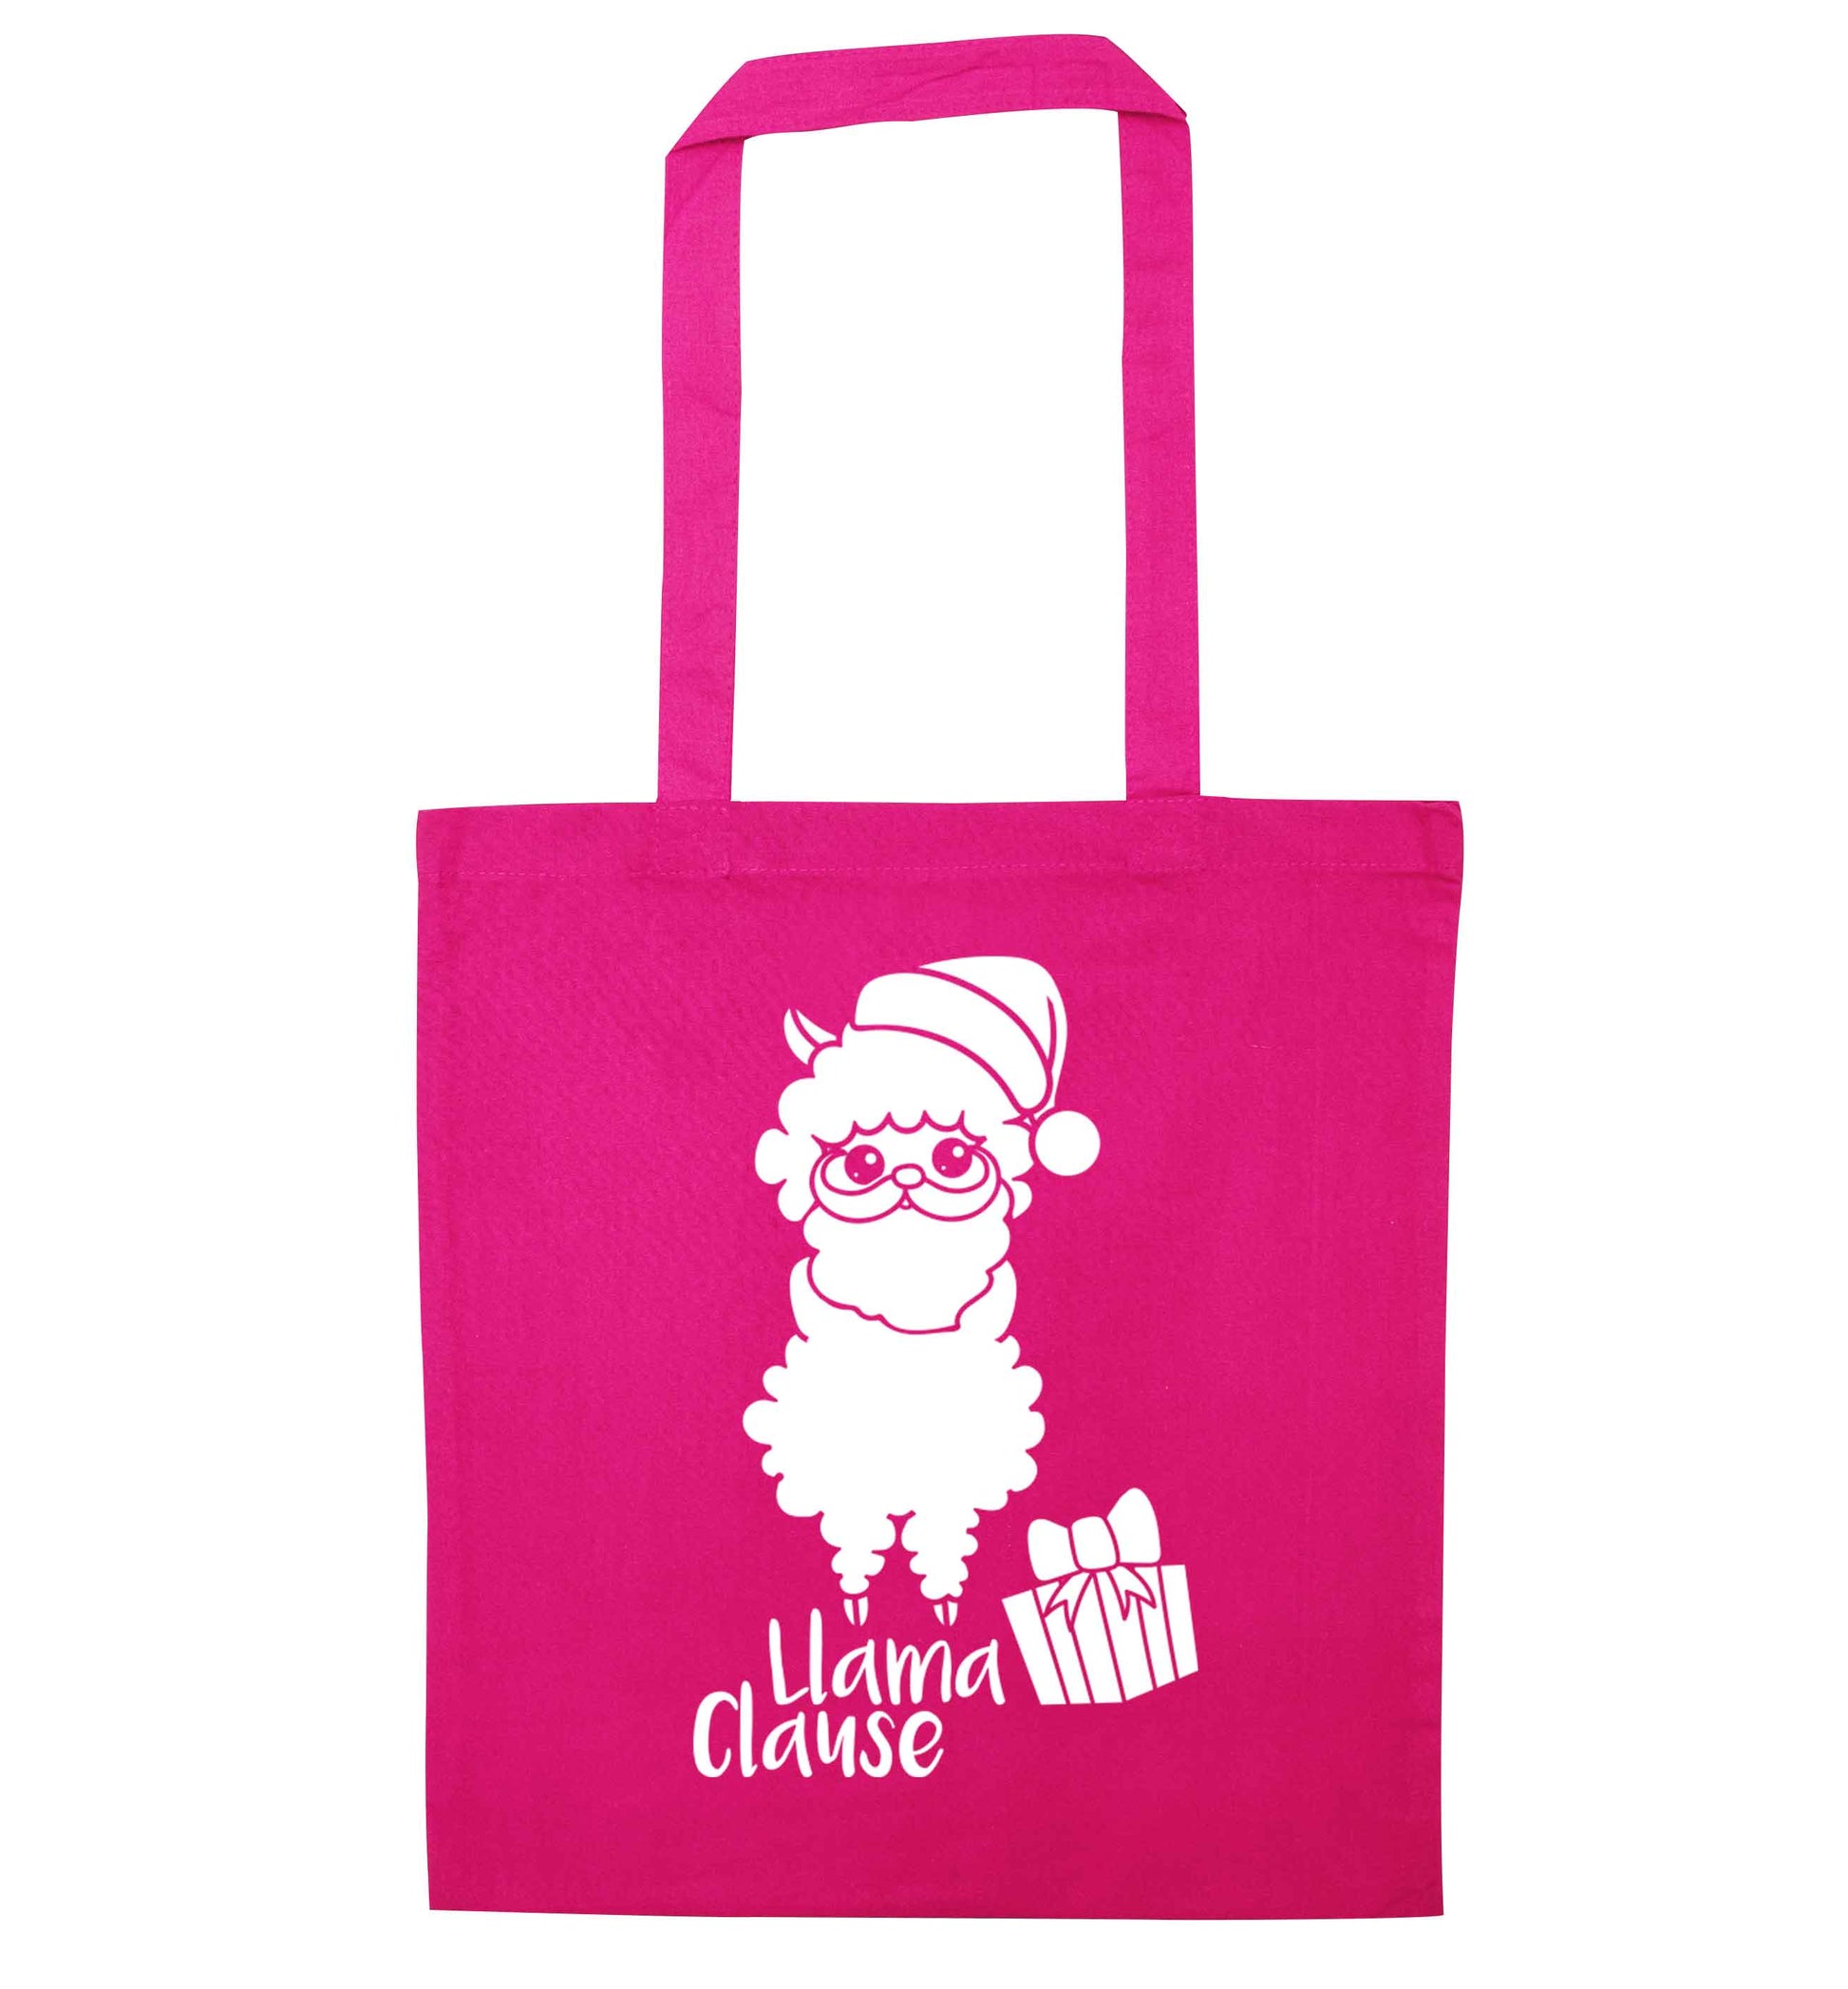 Llama Clause pink tote bag